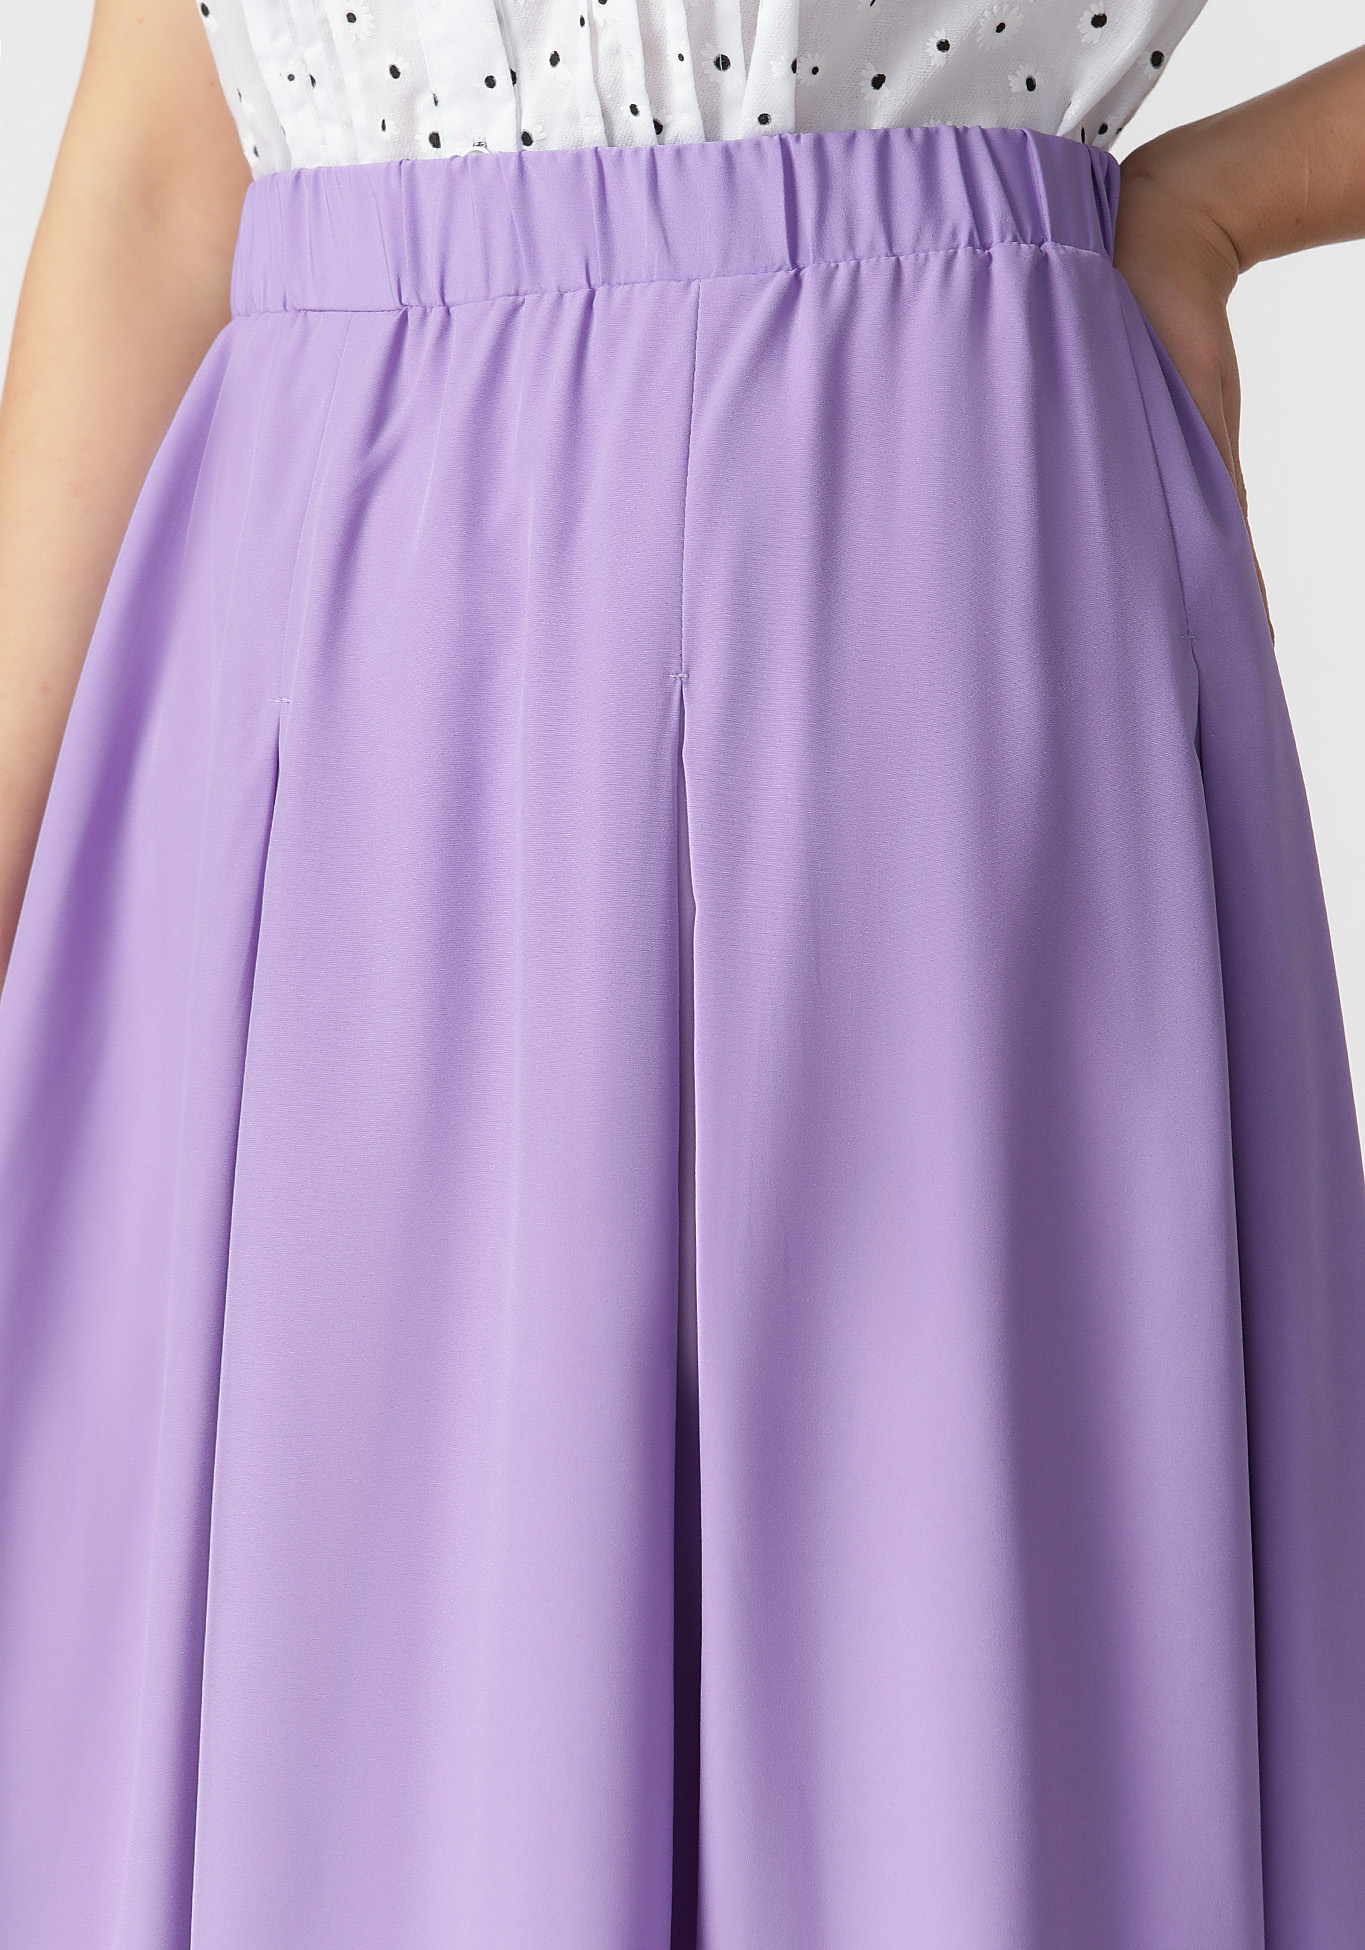 Юбка "Агнес", размер 50, цвет фиолетовый - фото 8